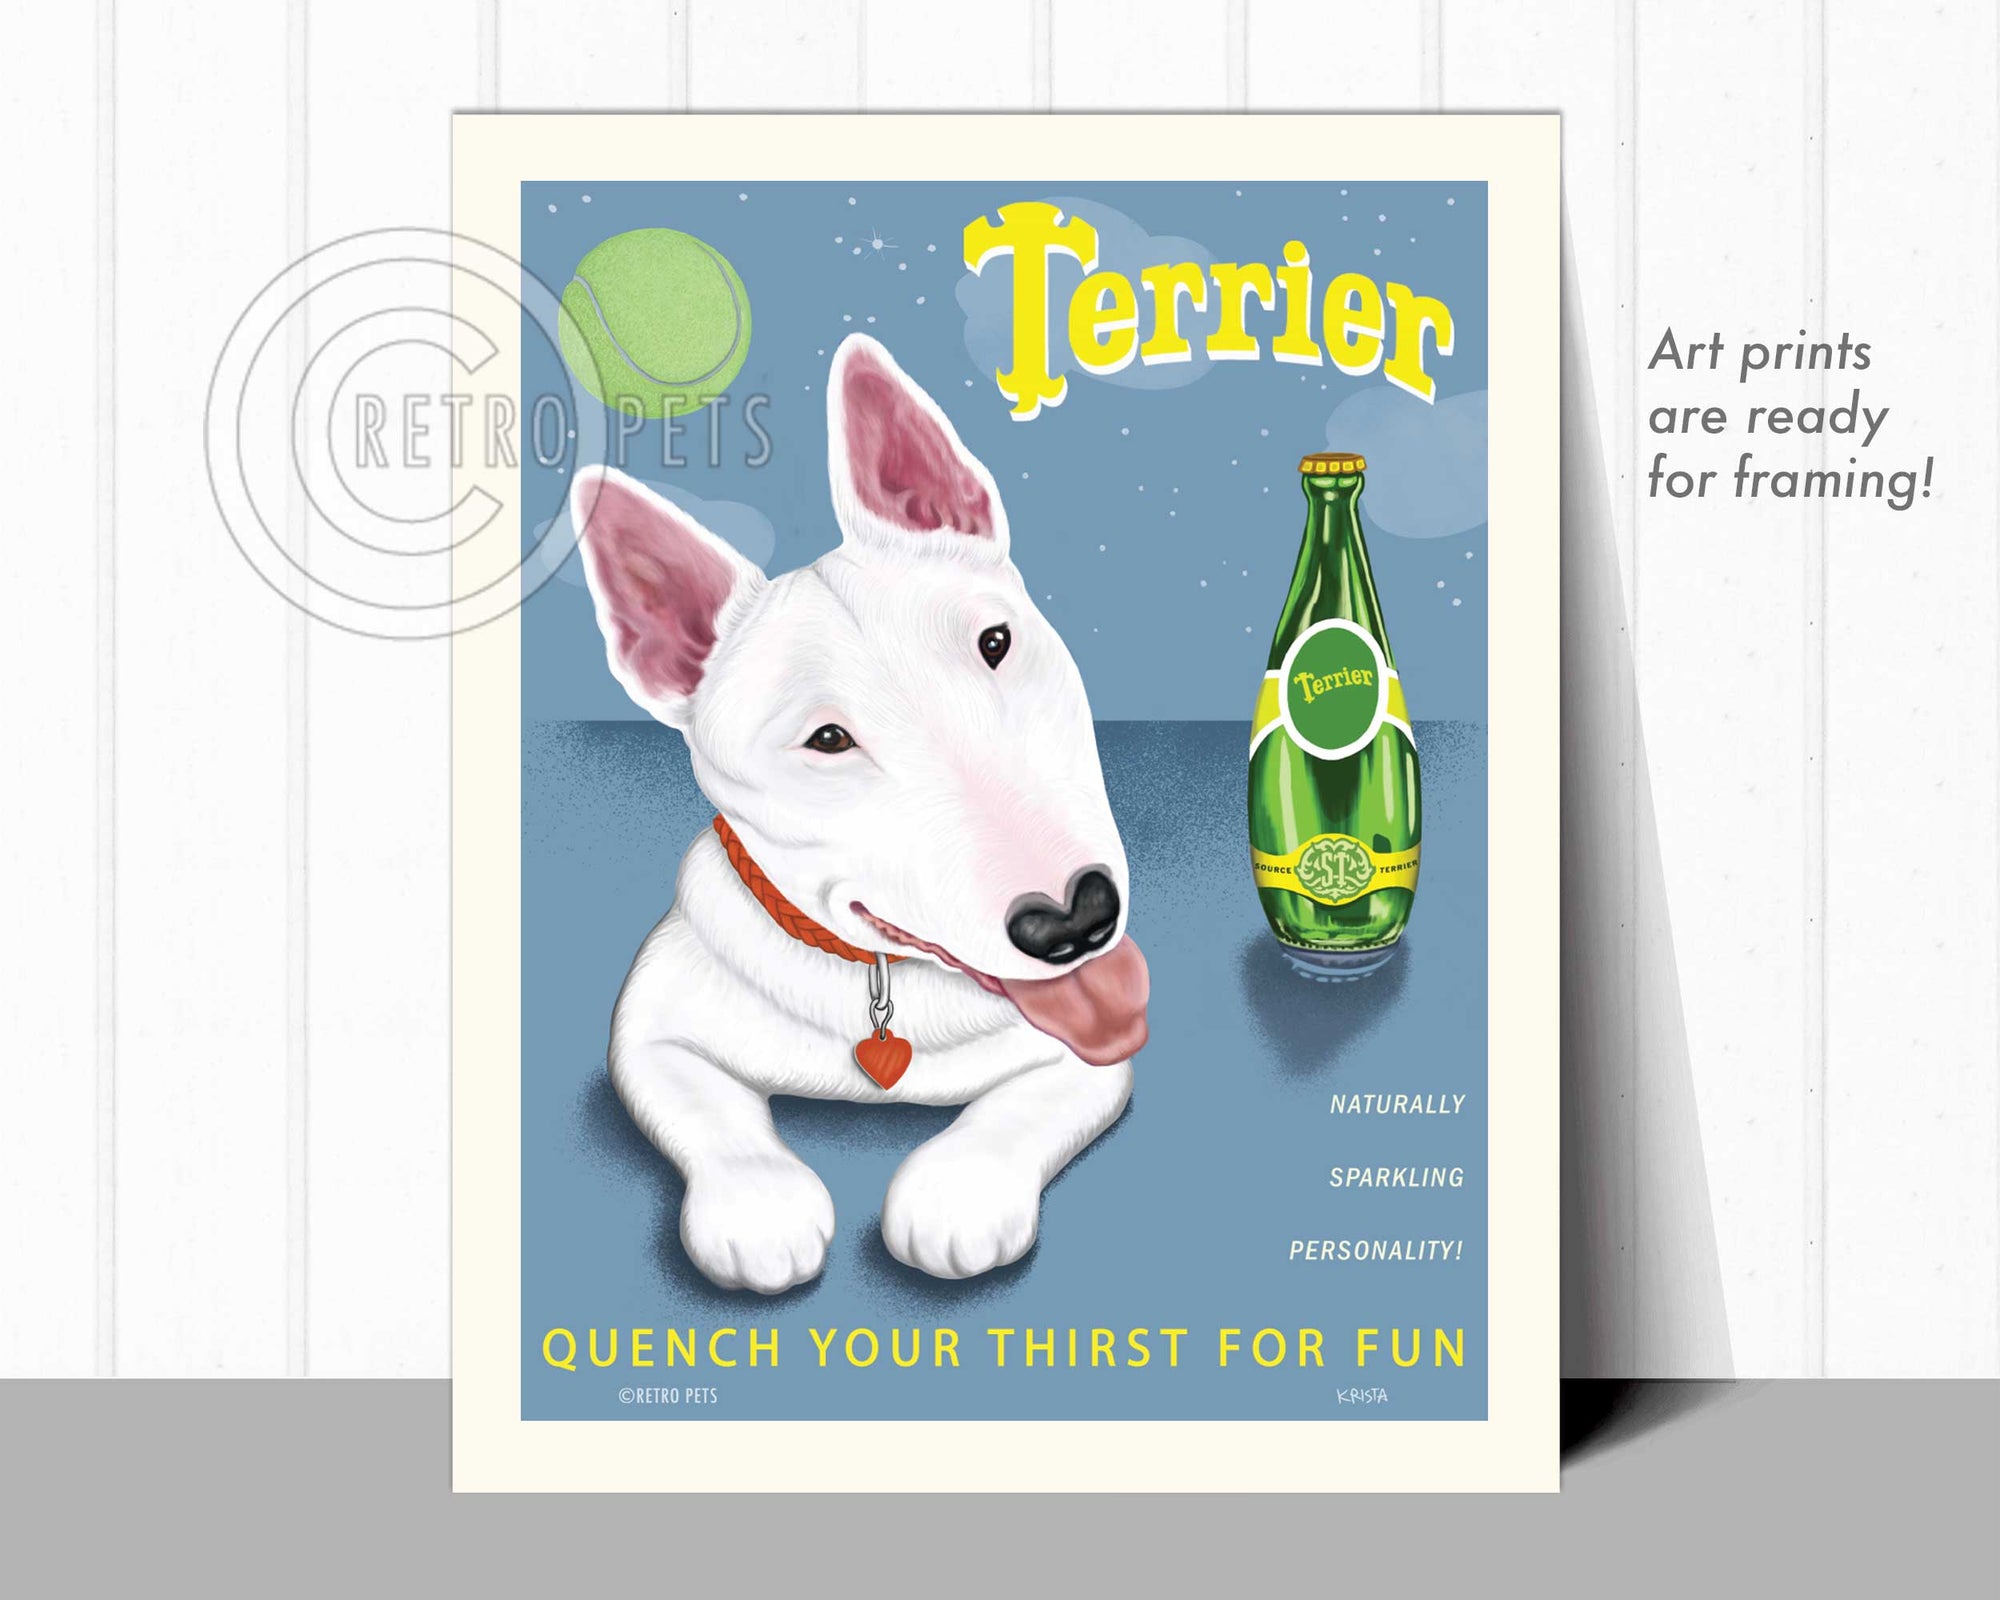 Bull Terrier Art "Terrier" Art Print by Krista Brooks | Retro Pets Art